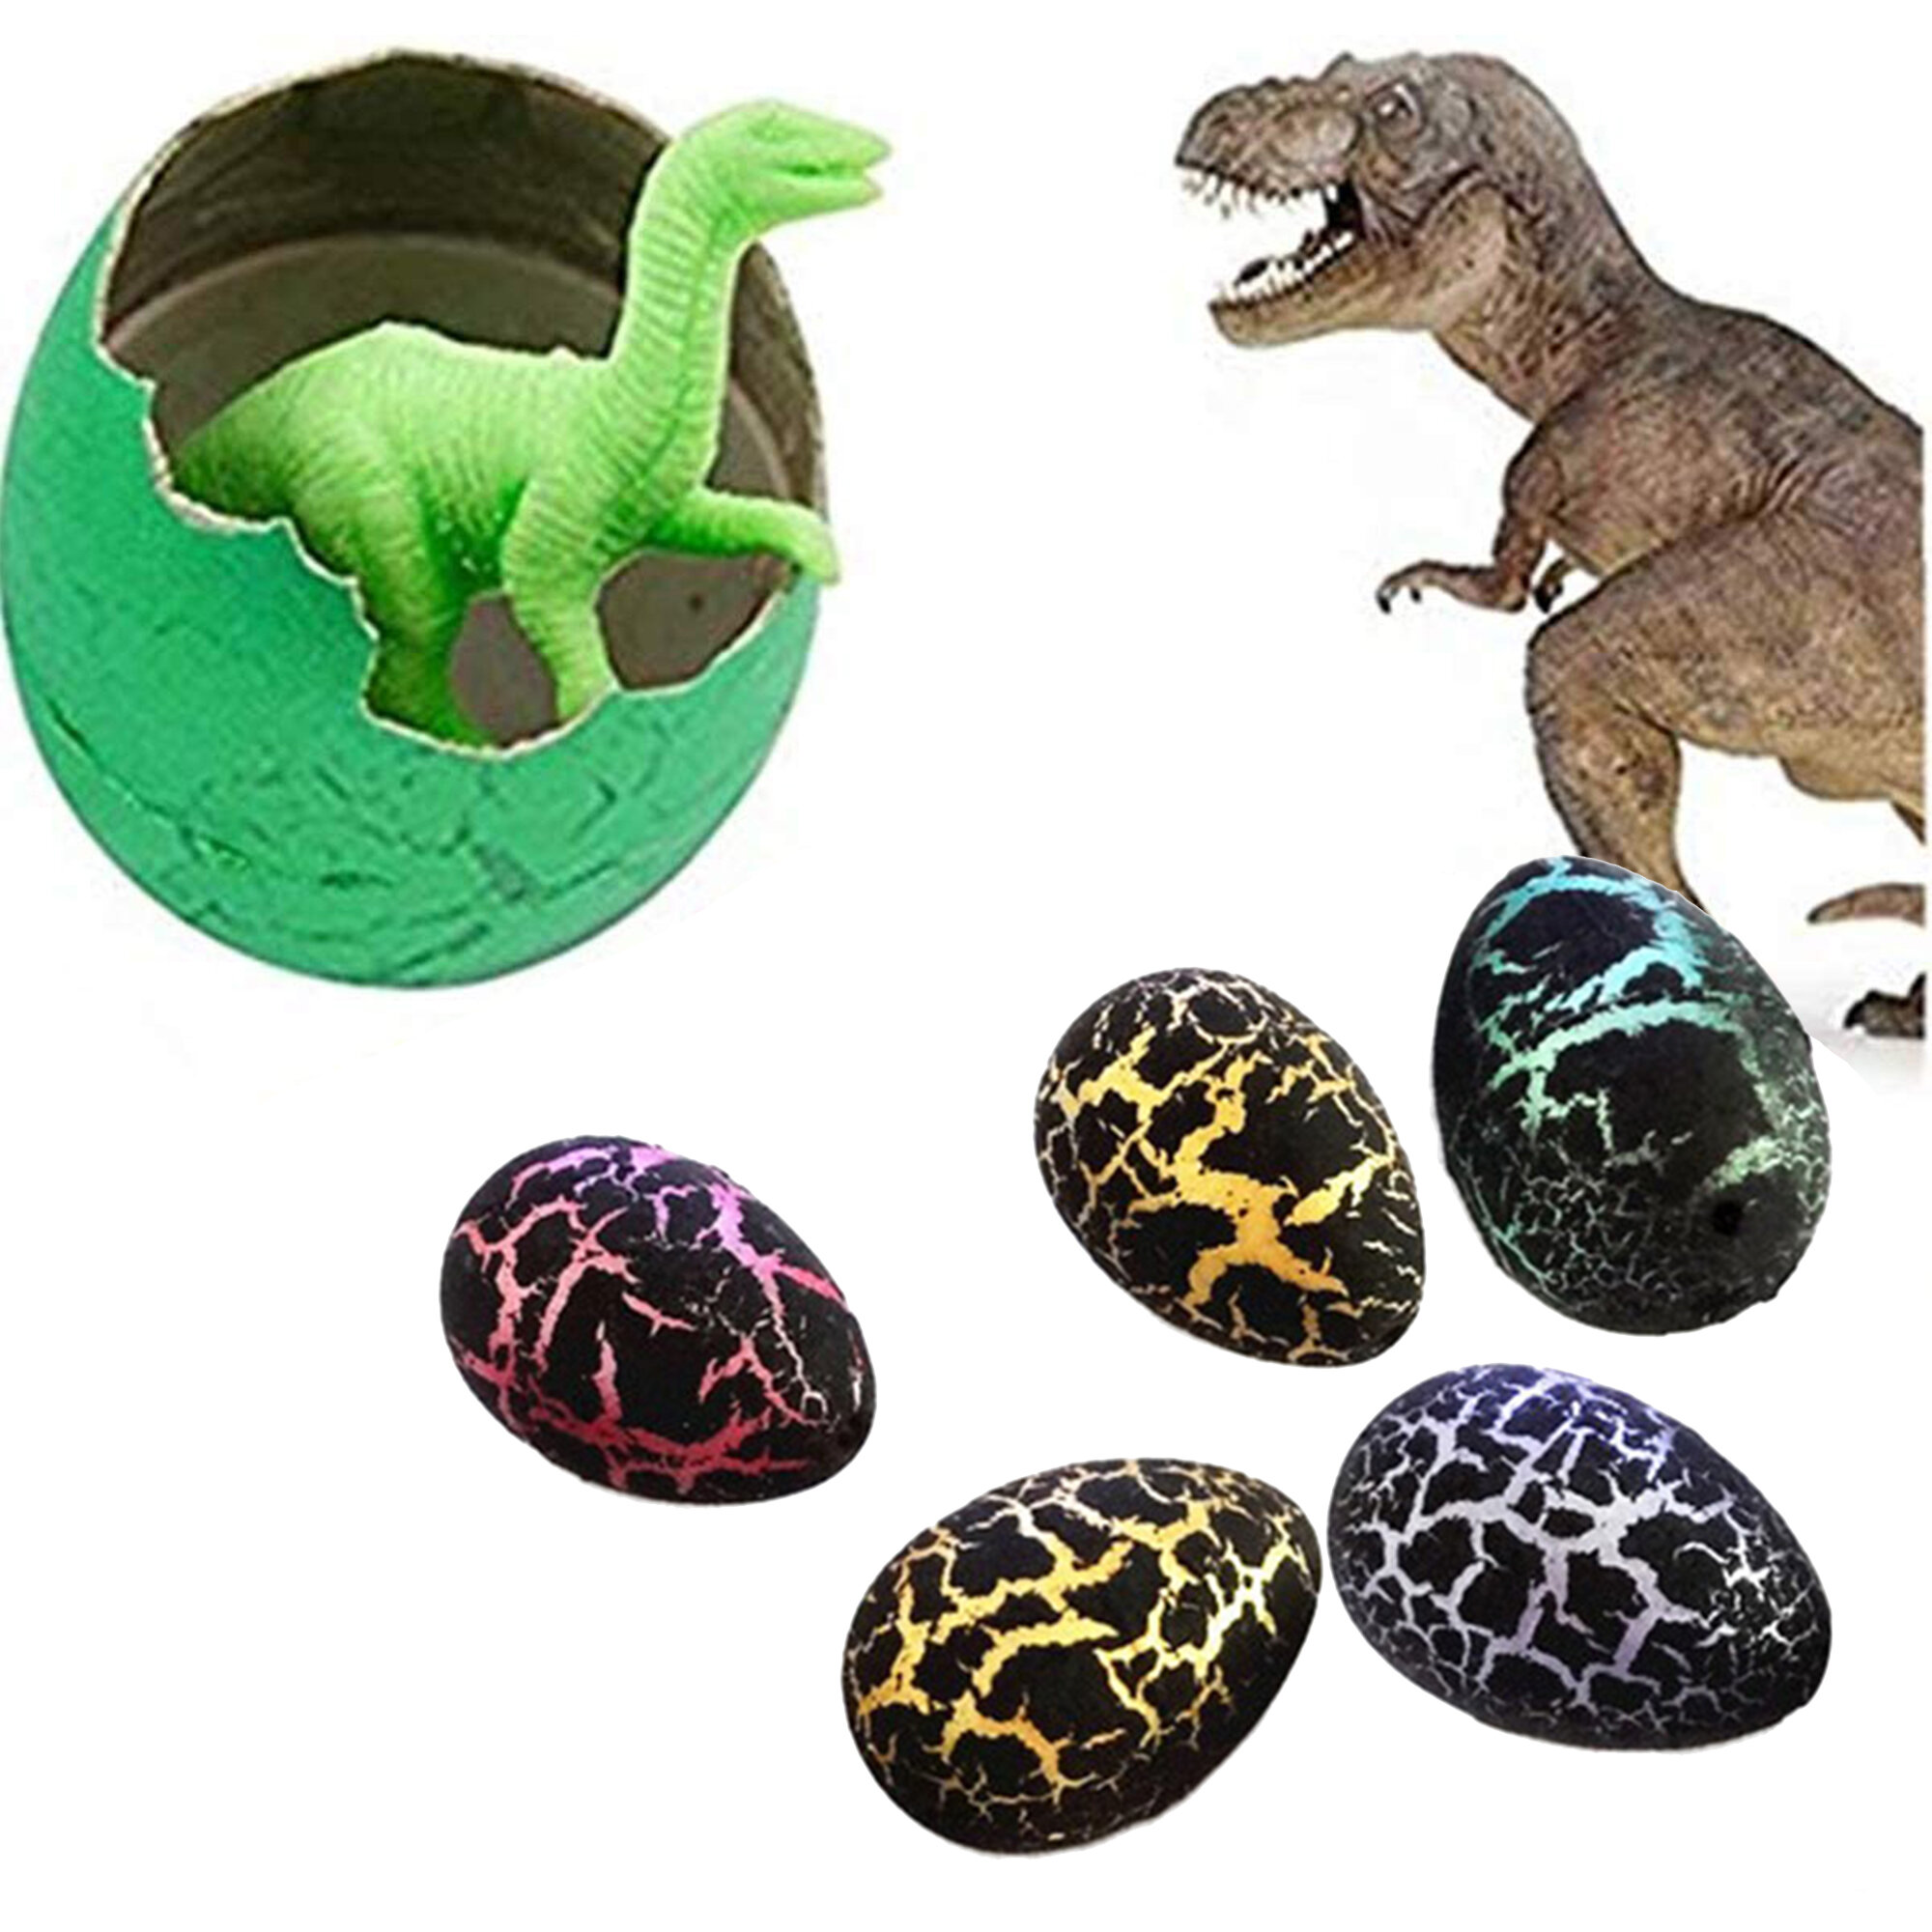 dinosaur eggs hatching